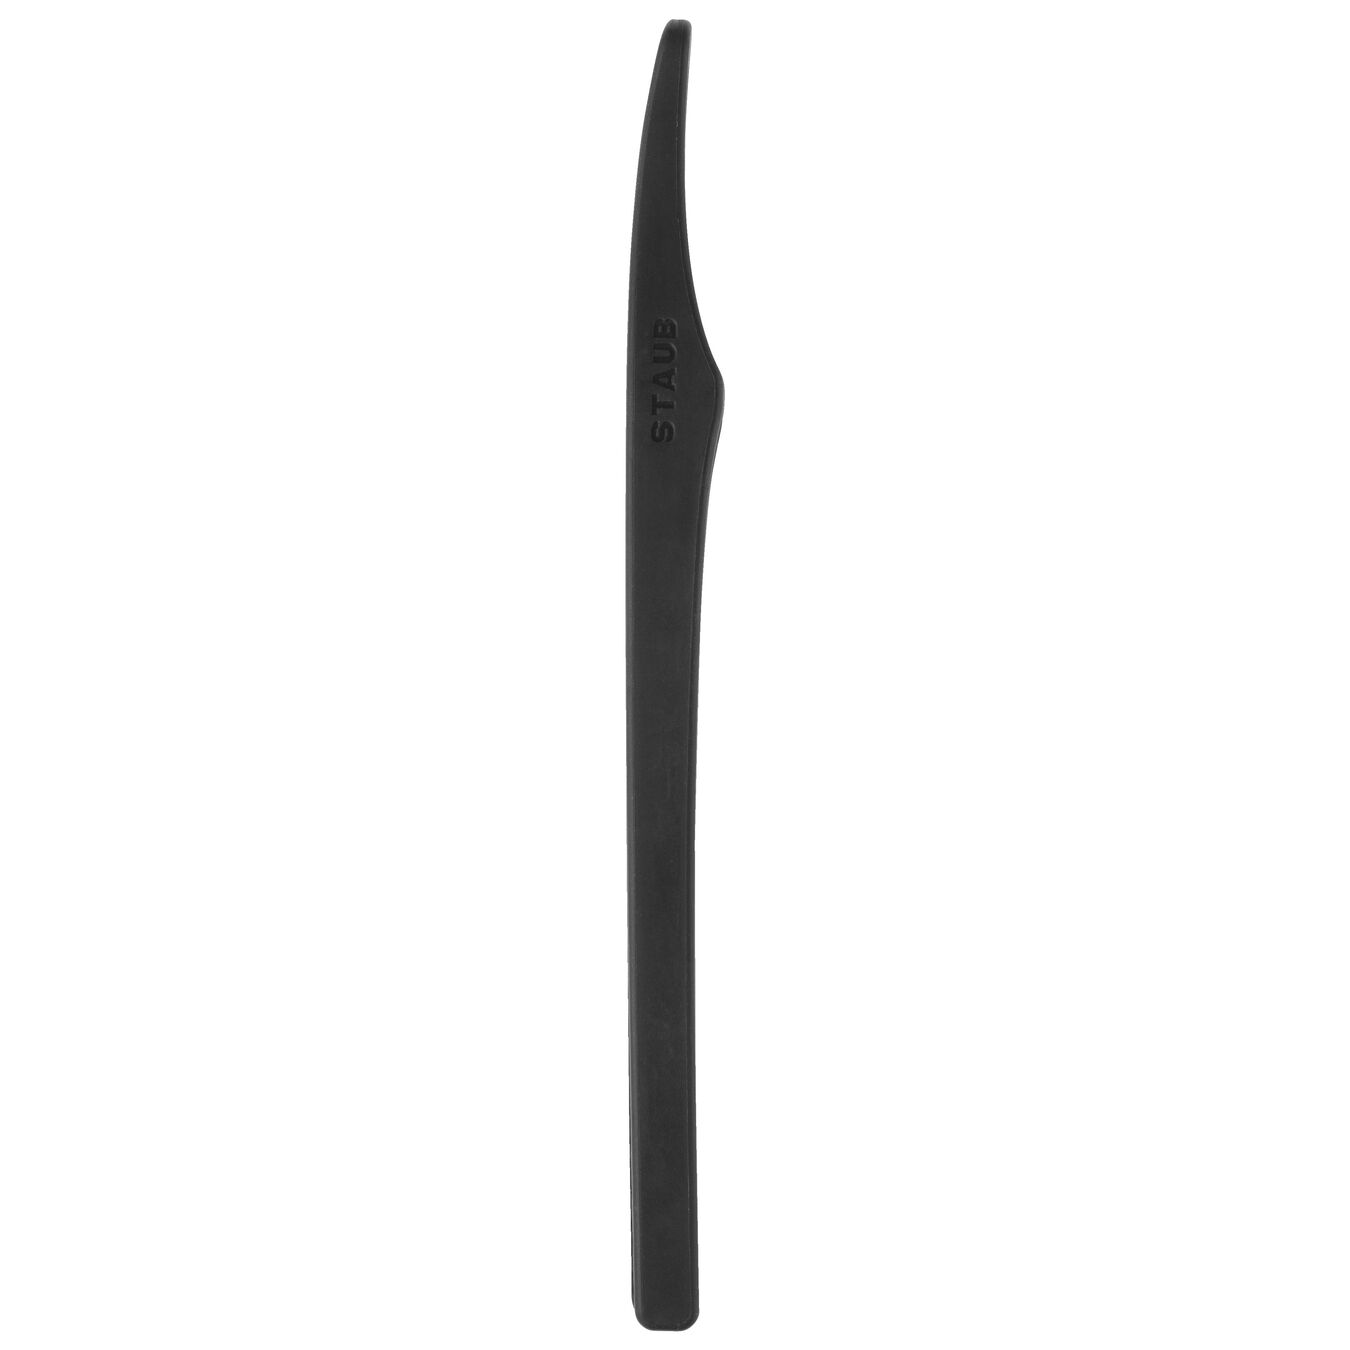 31 cm silicone Tongs, black,,large 3